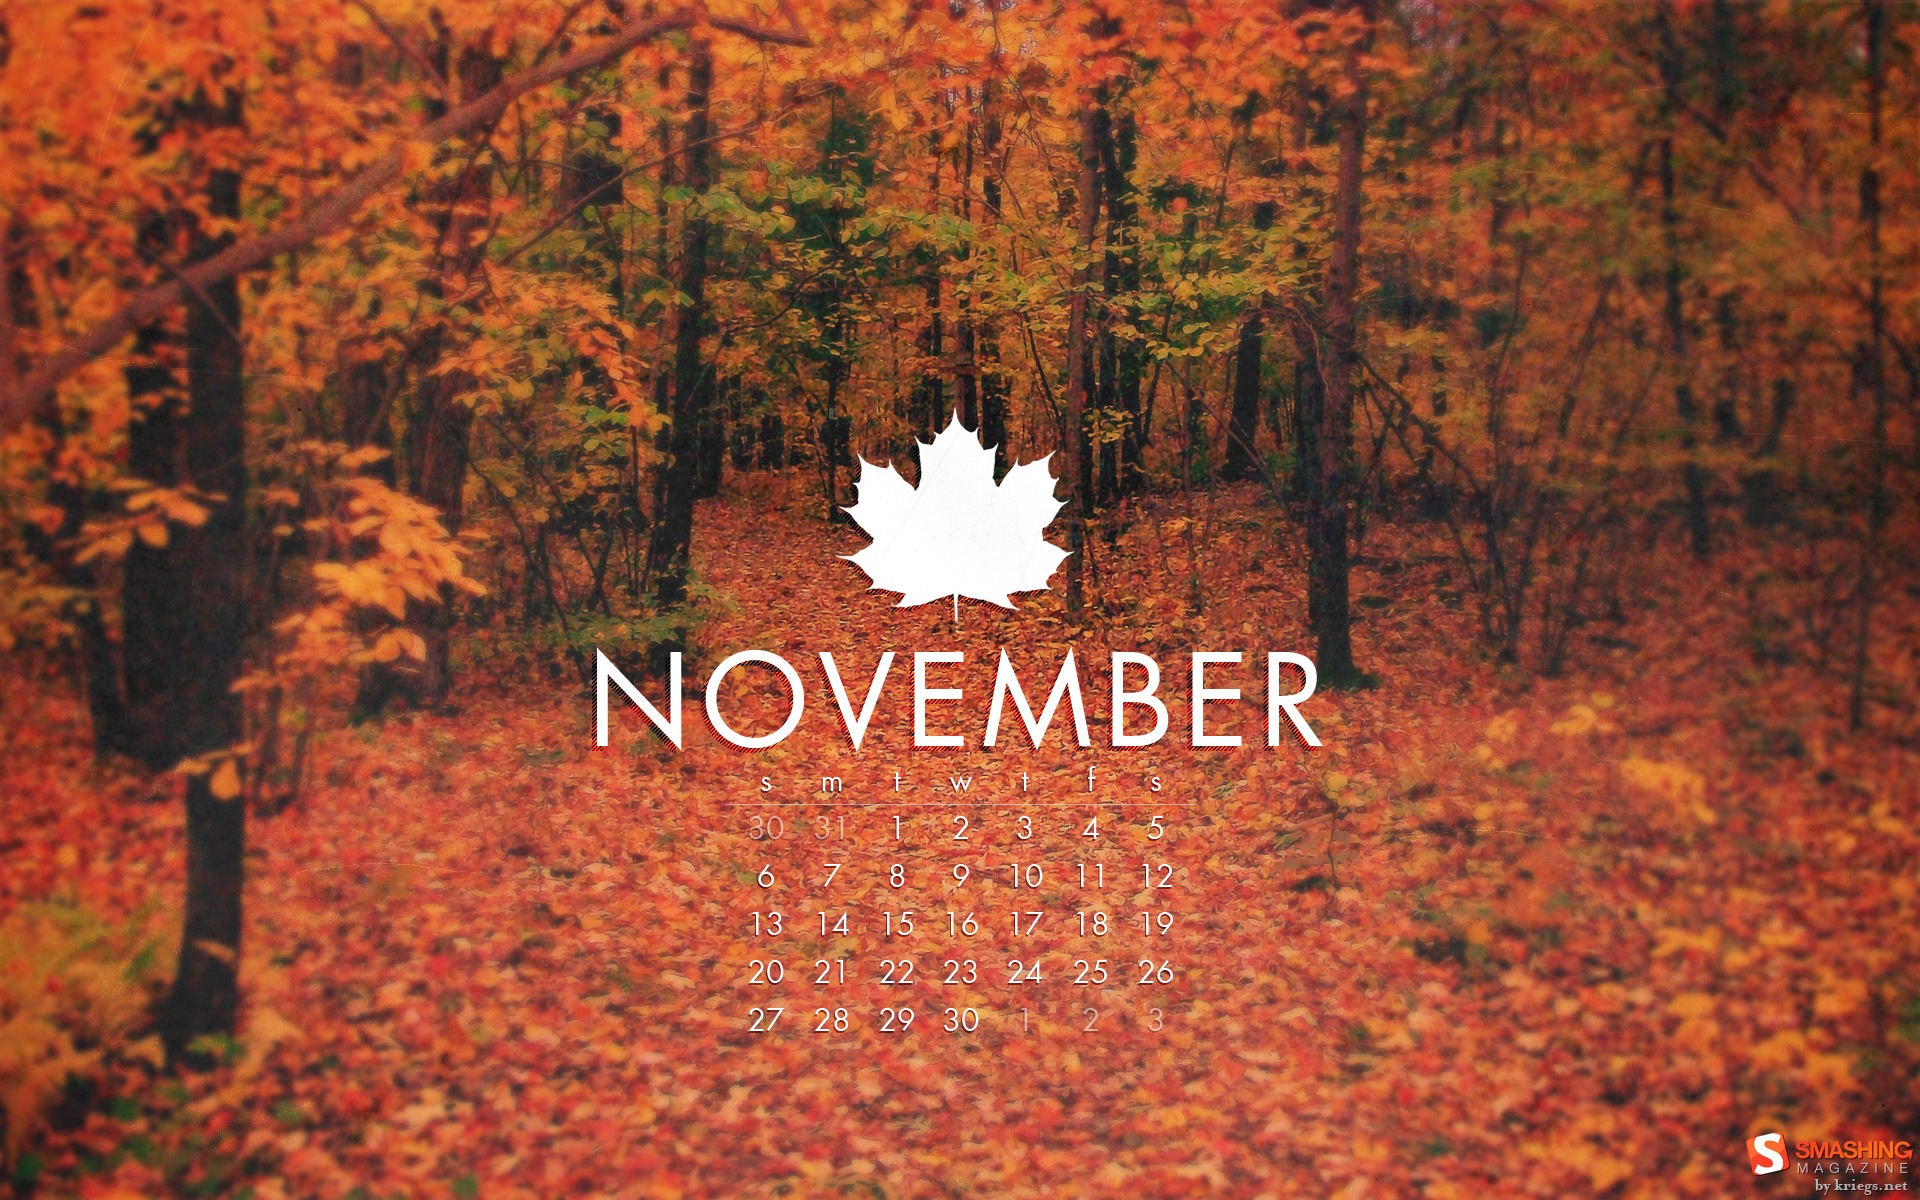 November 2011 Kalender Wallpaper (2) #11 - 1920x1200